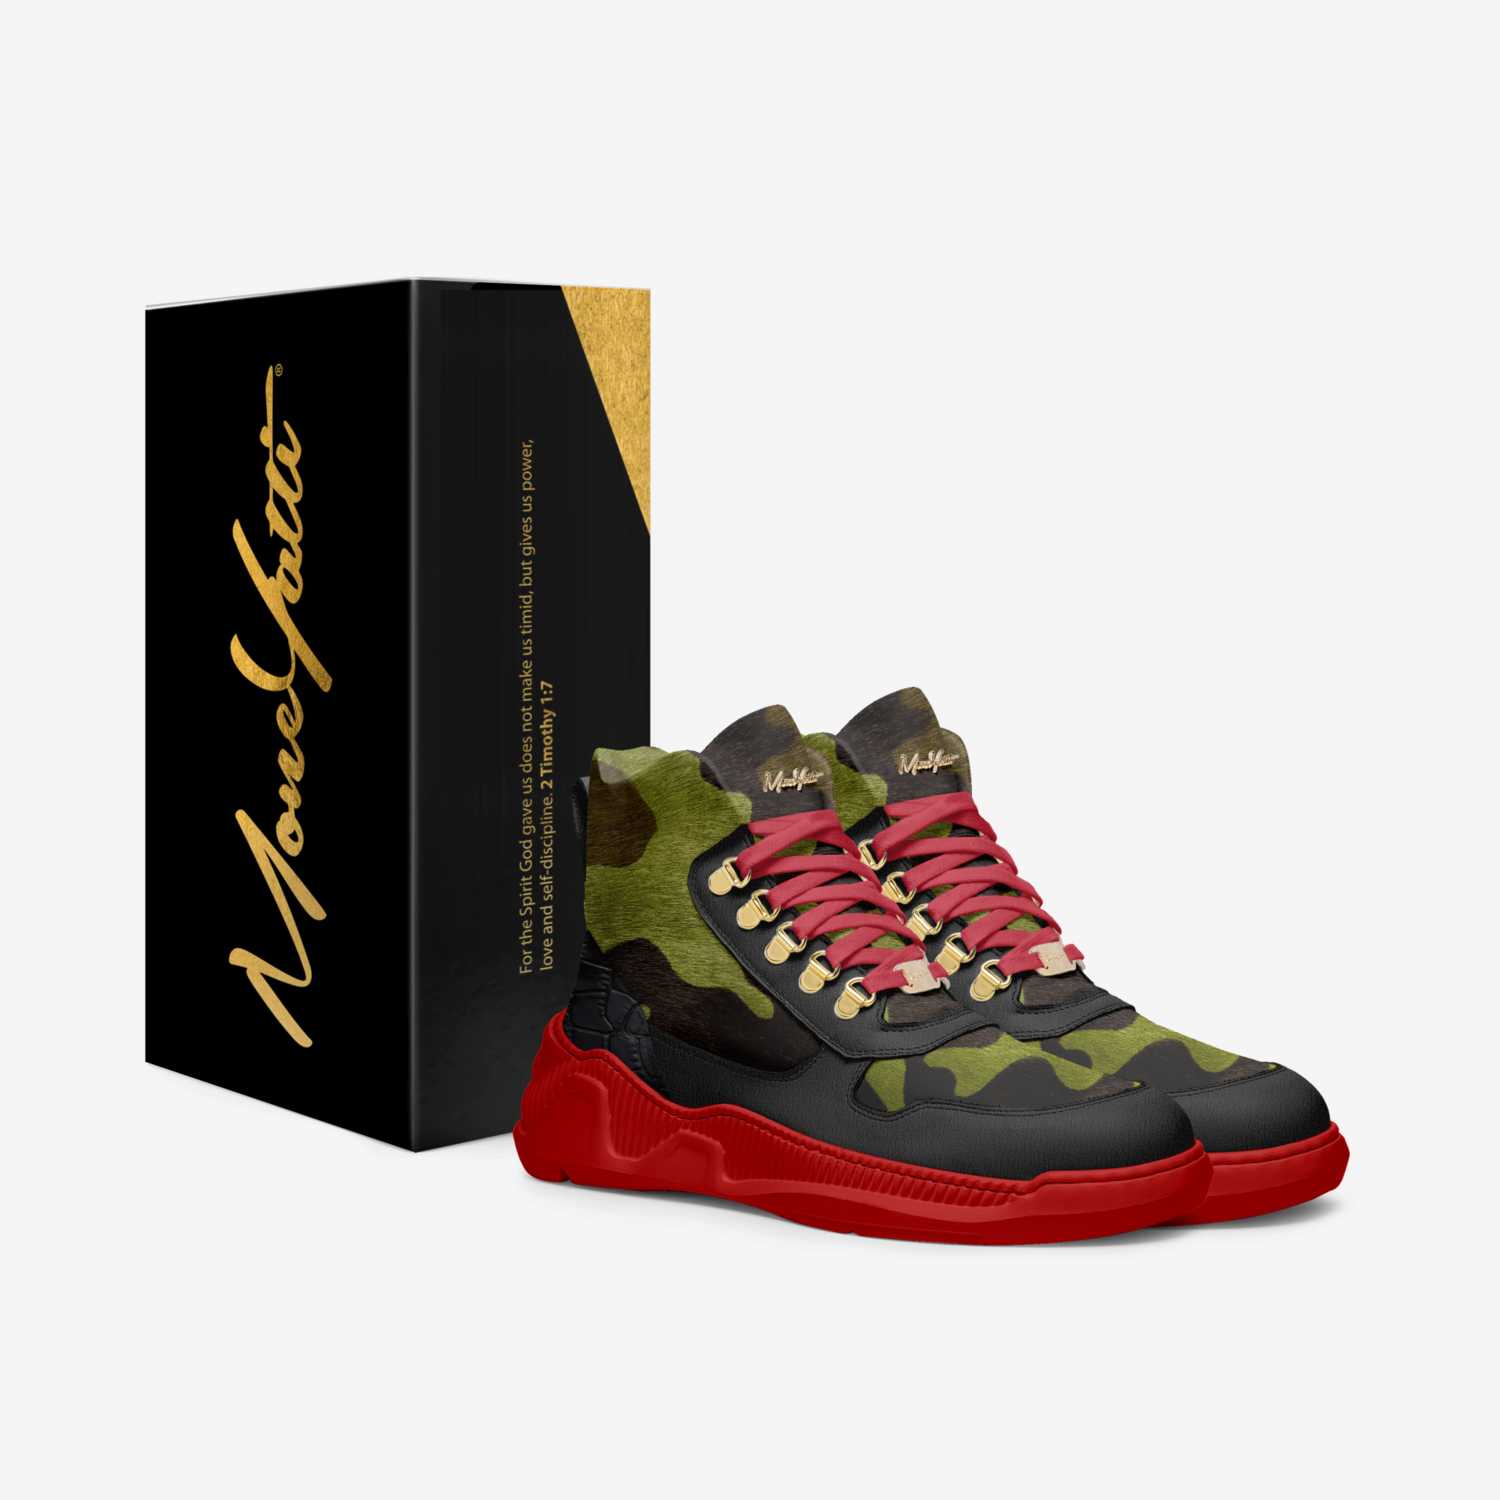 Moneyatti Trap 98 custom made in Italy shoes by Moneyatti Brand | Box view